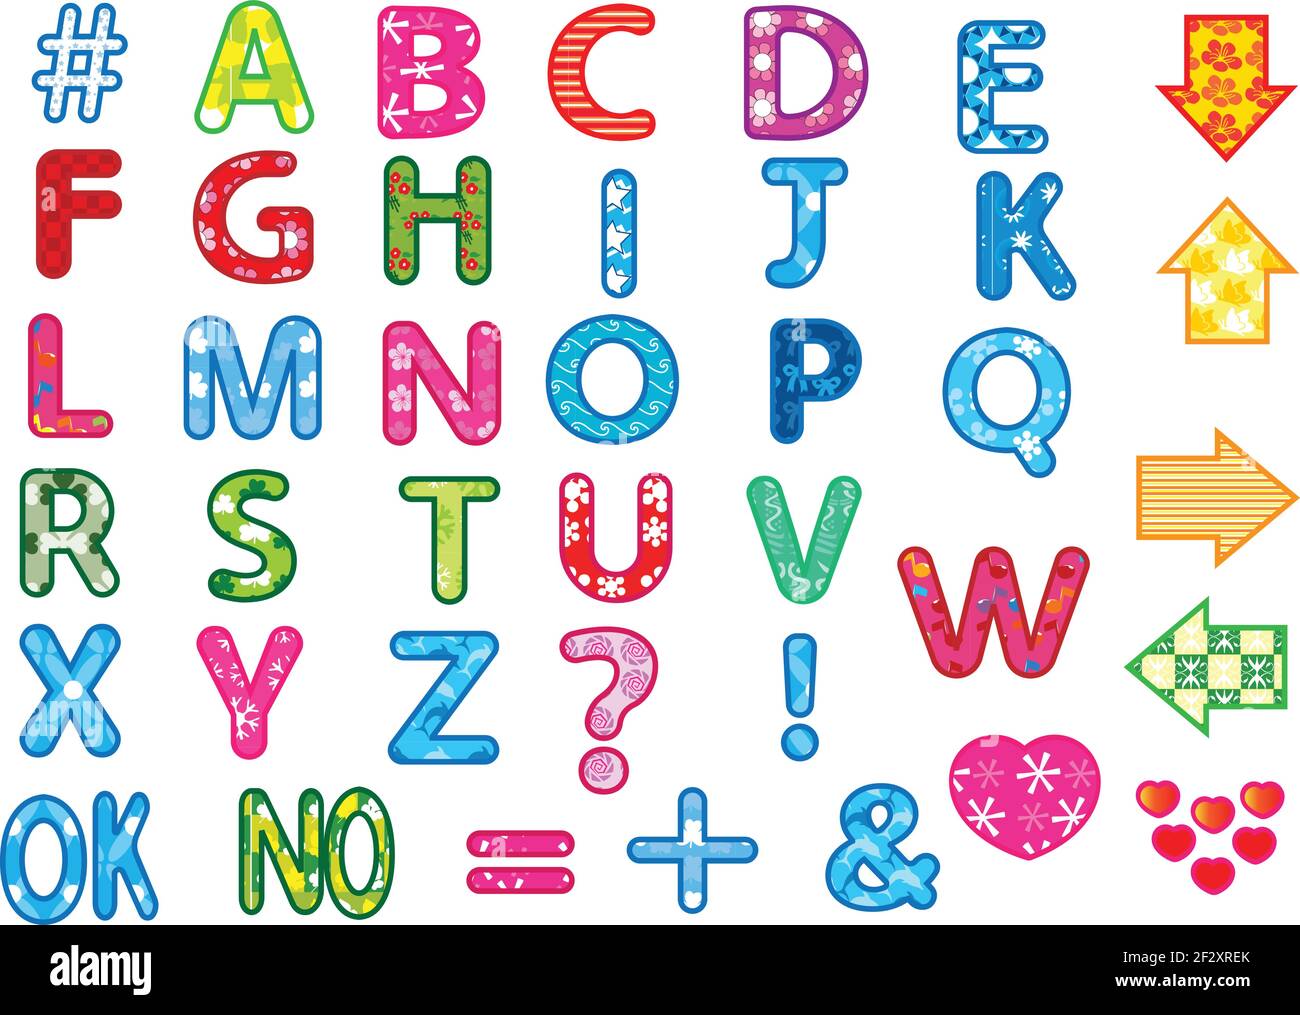 English alphabet design a-z s1 to 10 series Stock Vector Image ...